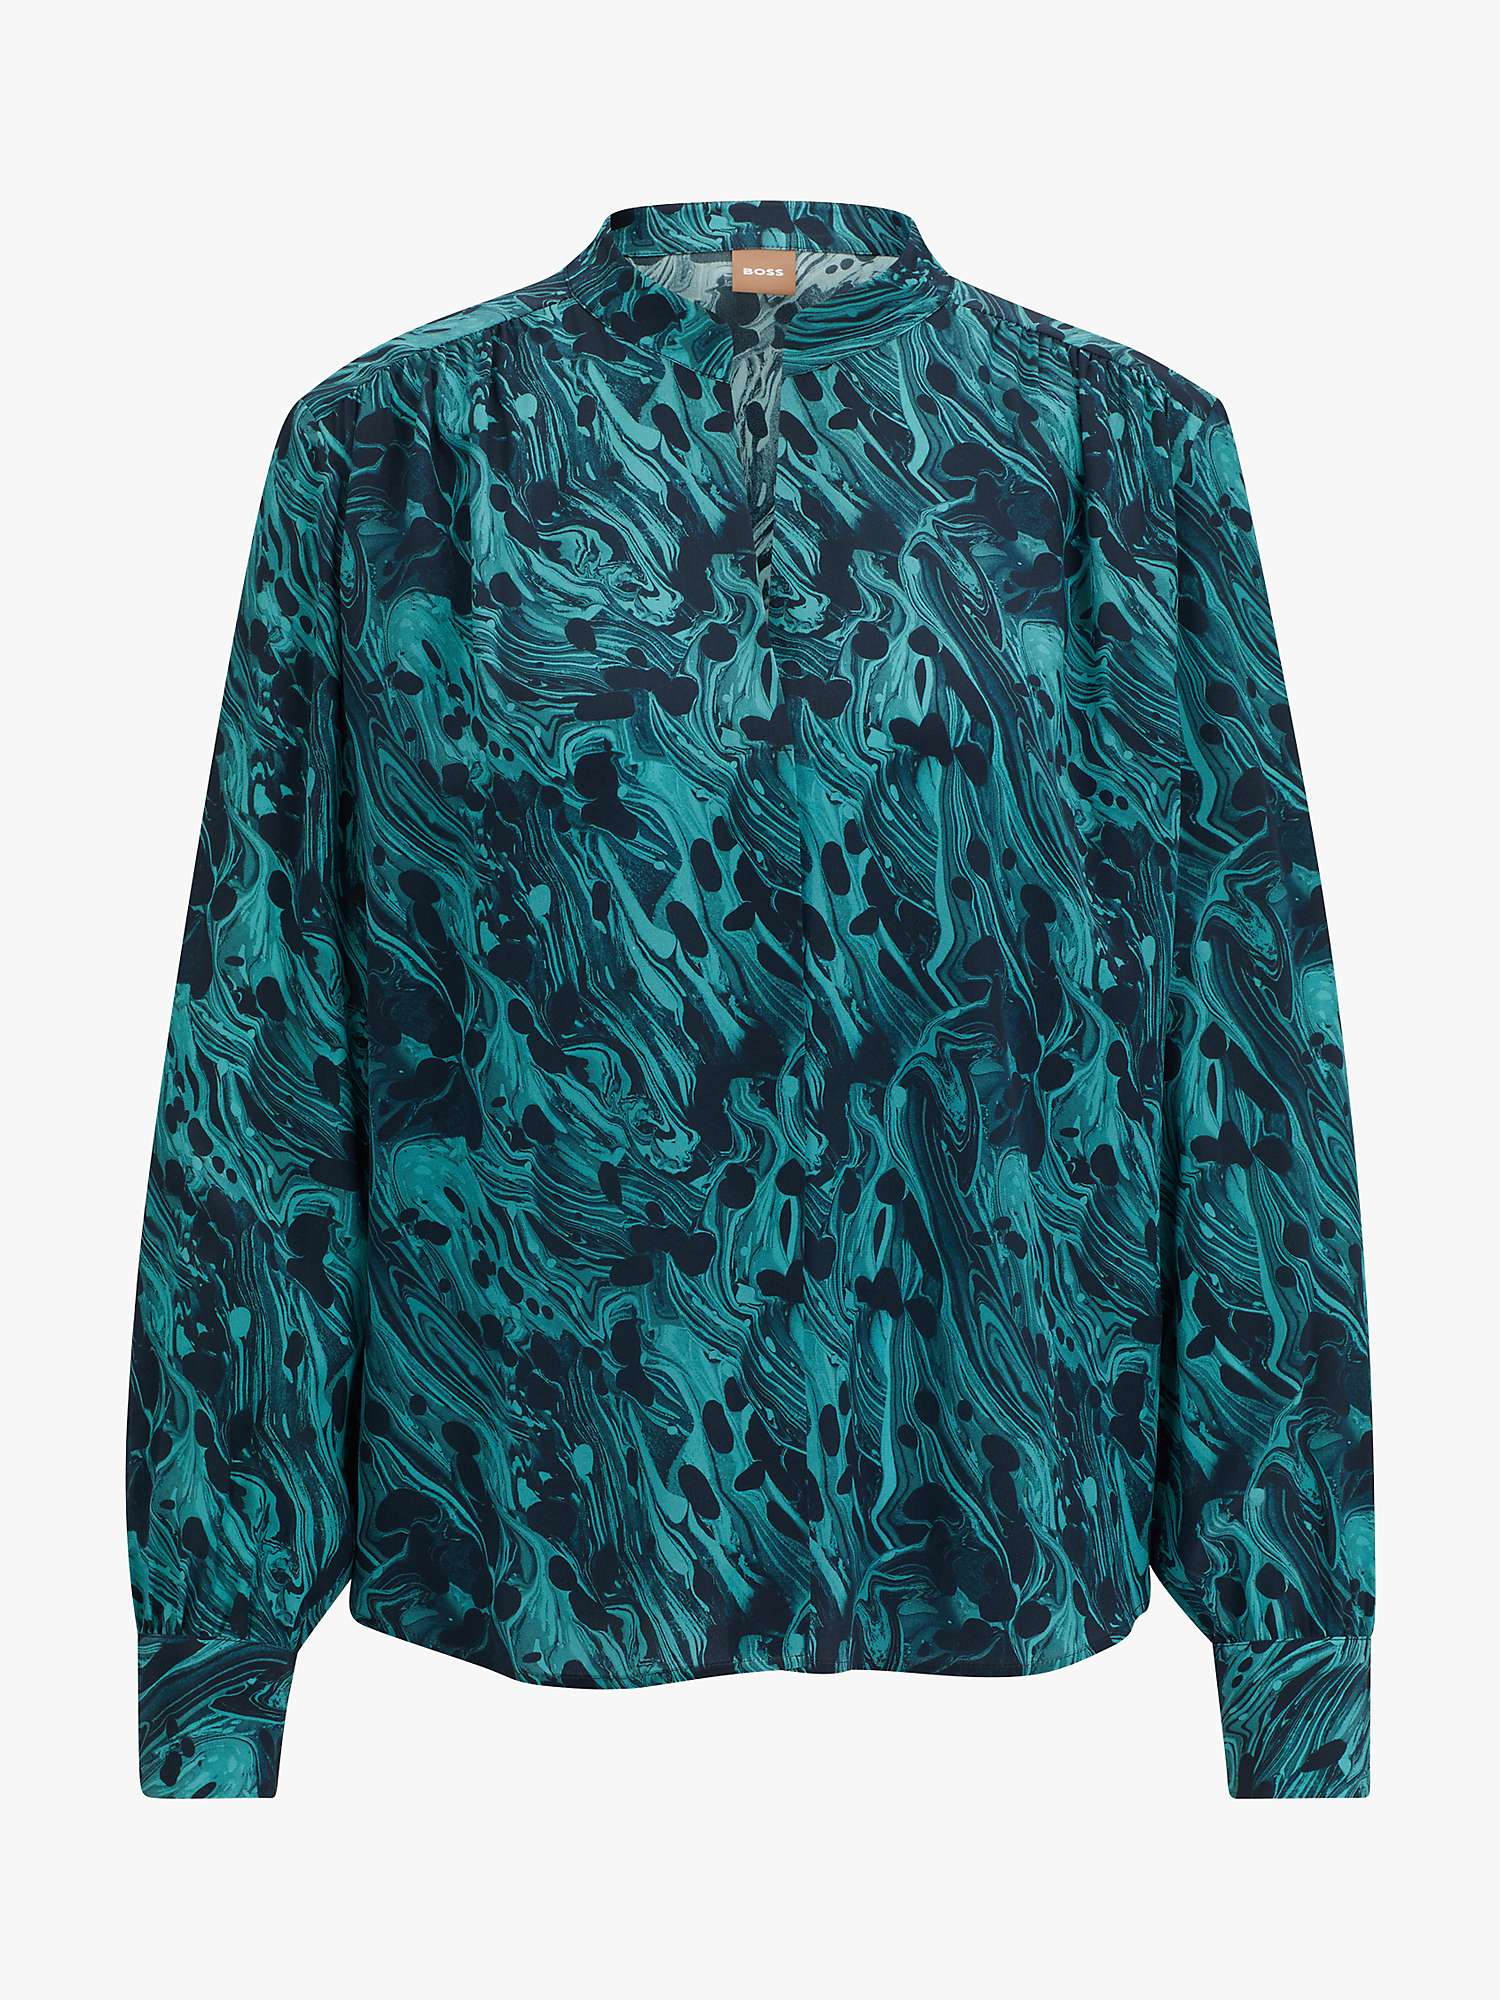 Buy BOSS Banora Abstract Print Silk Shirt, Navy/Teal Online at johnlewis.com